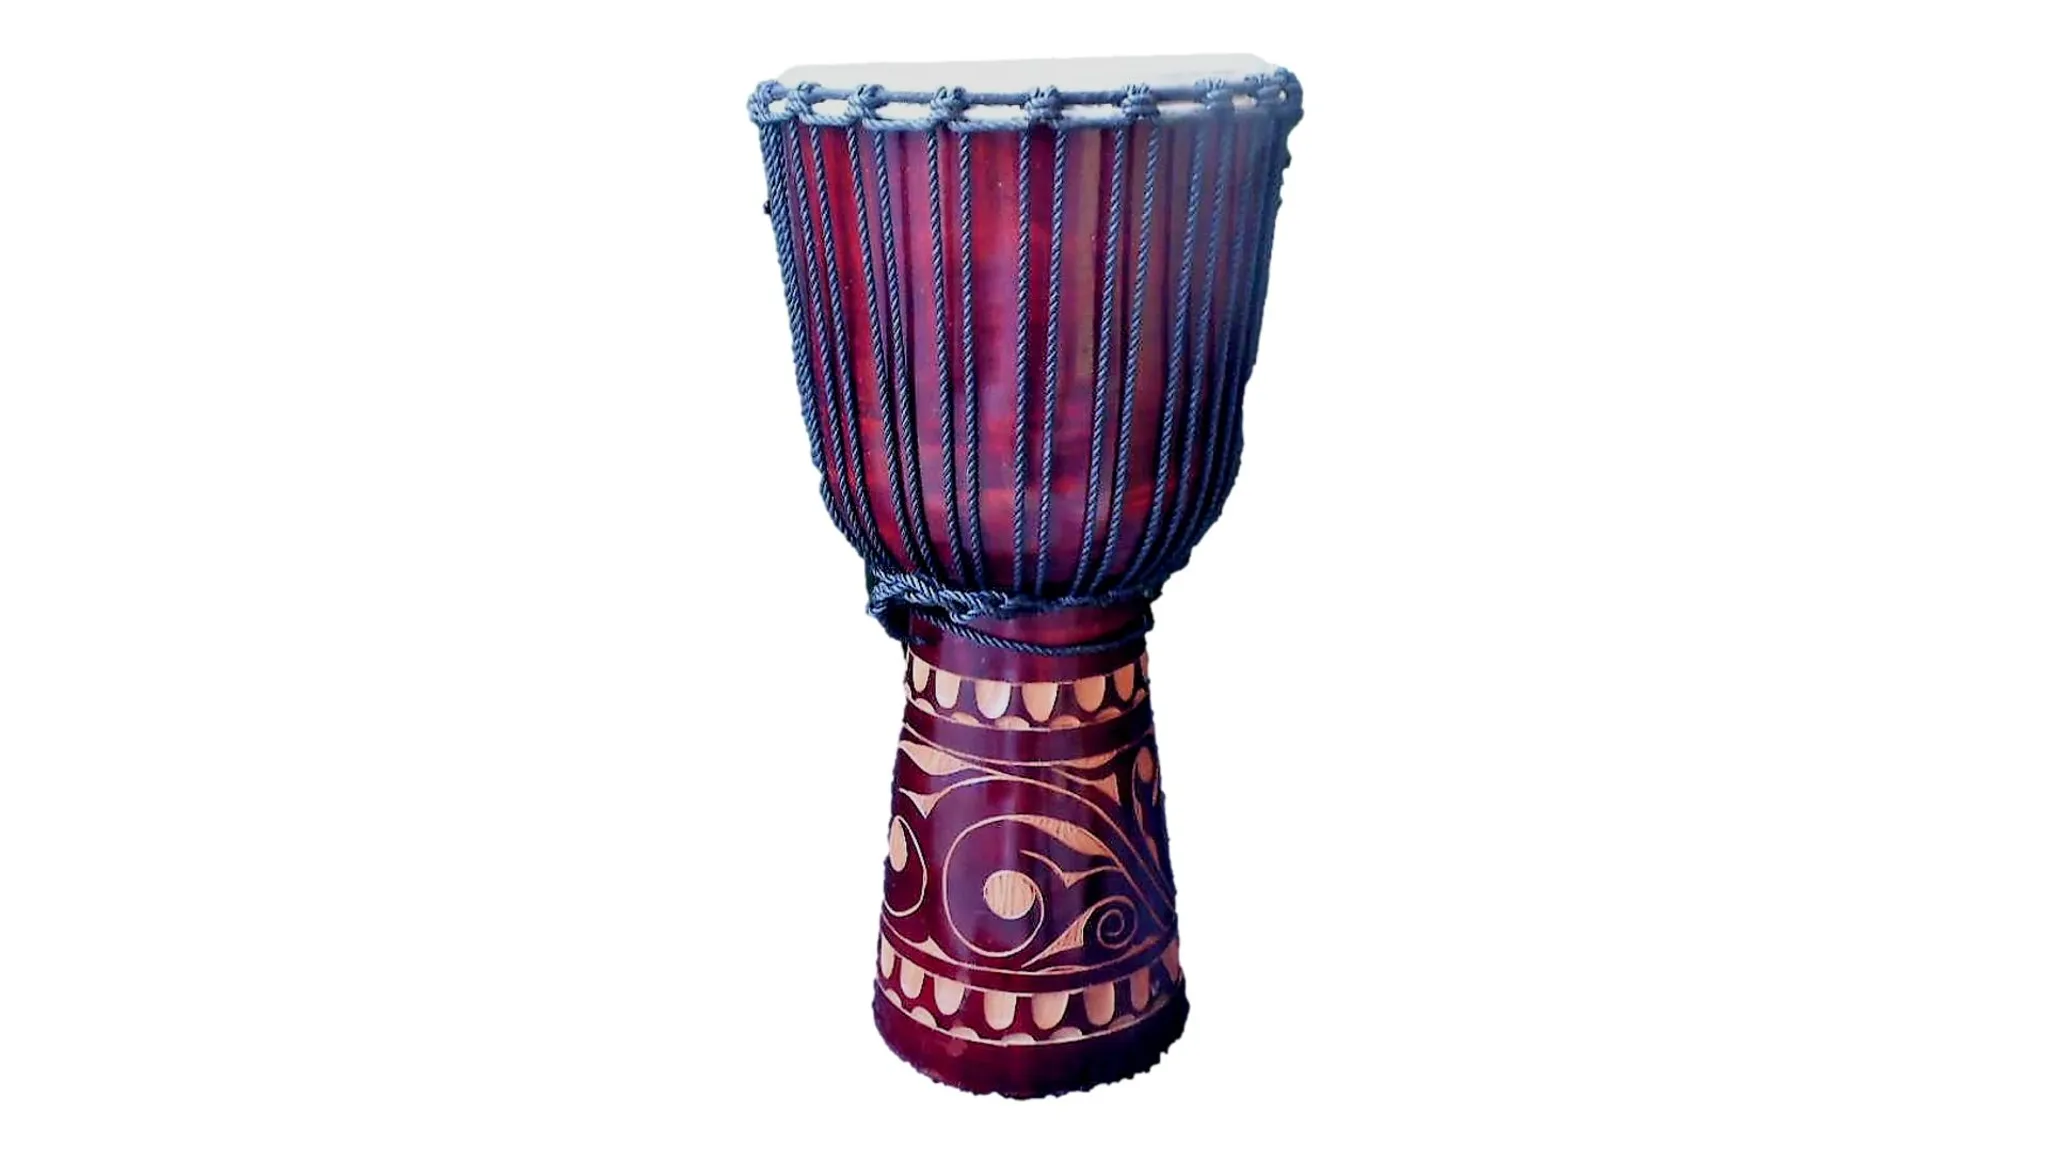 Trommel Afrika/Bali -Style Bongo Djembe Drum